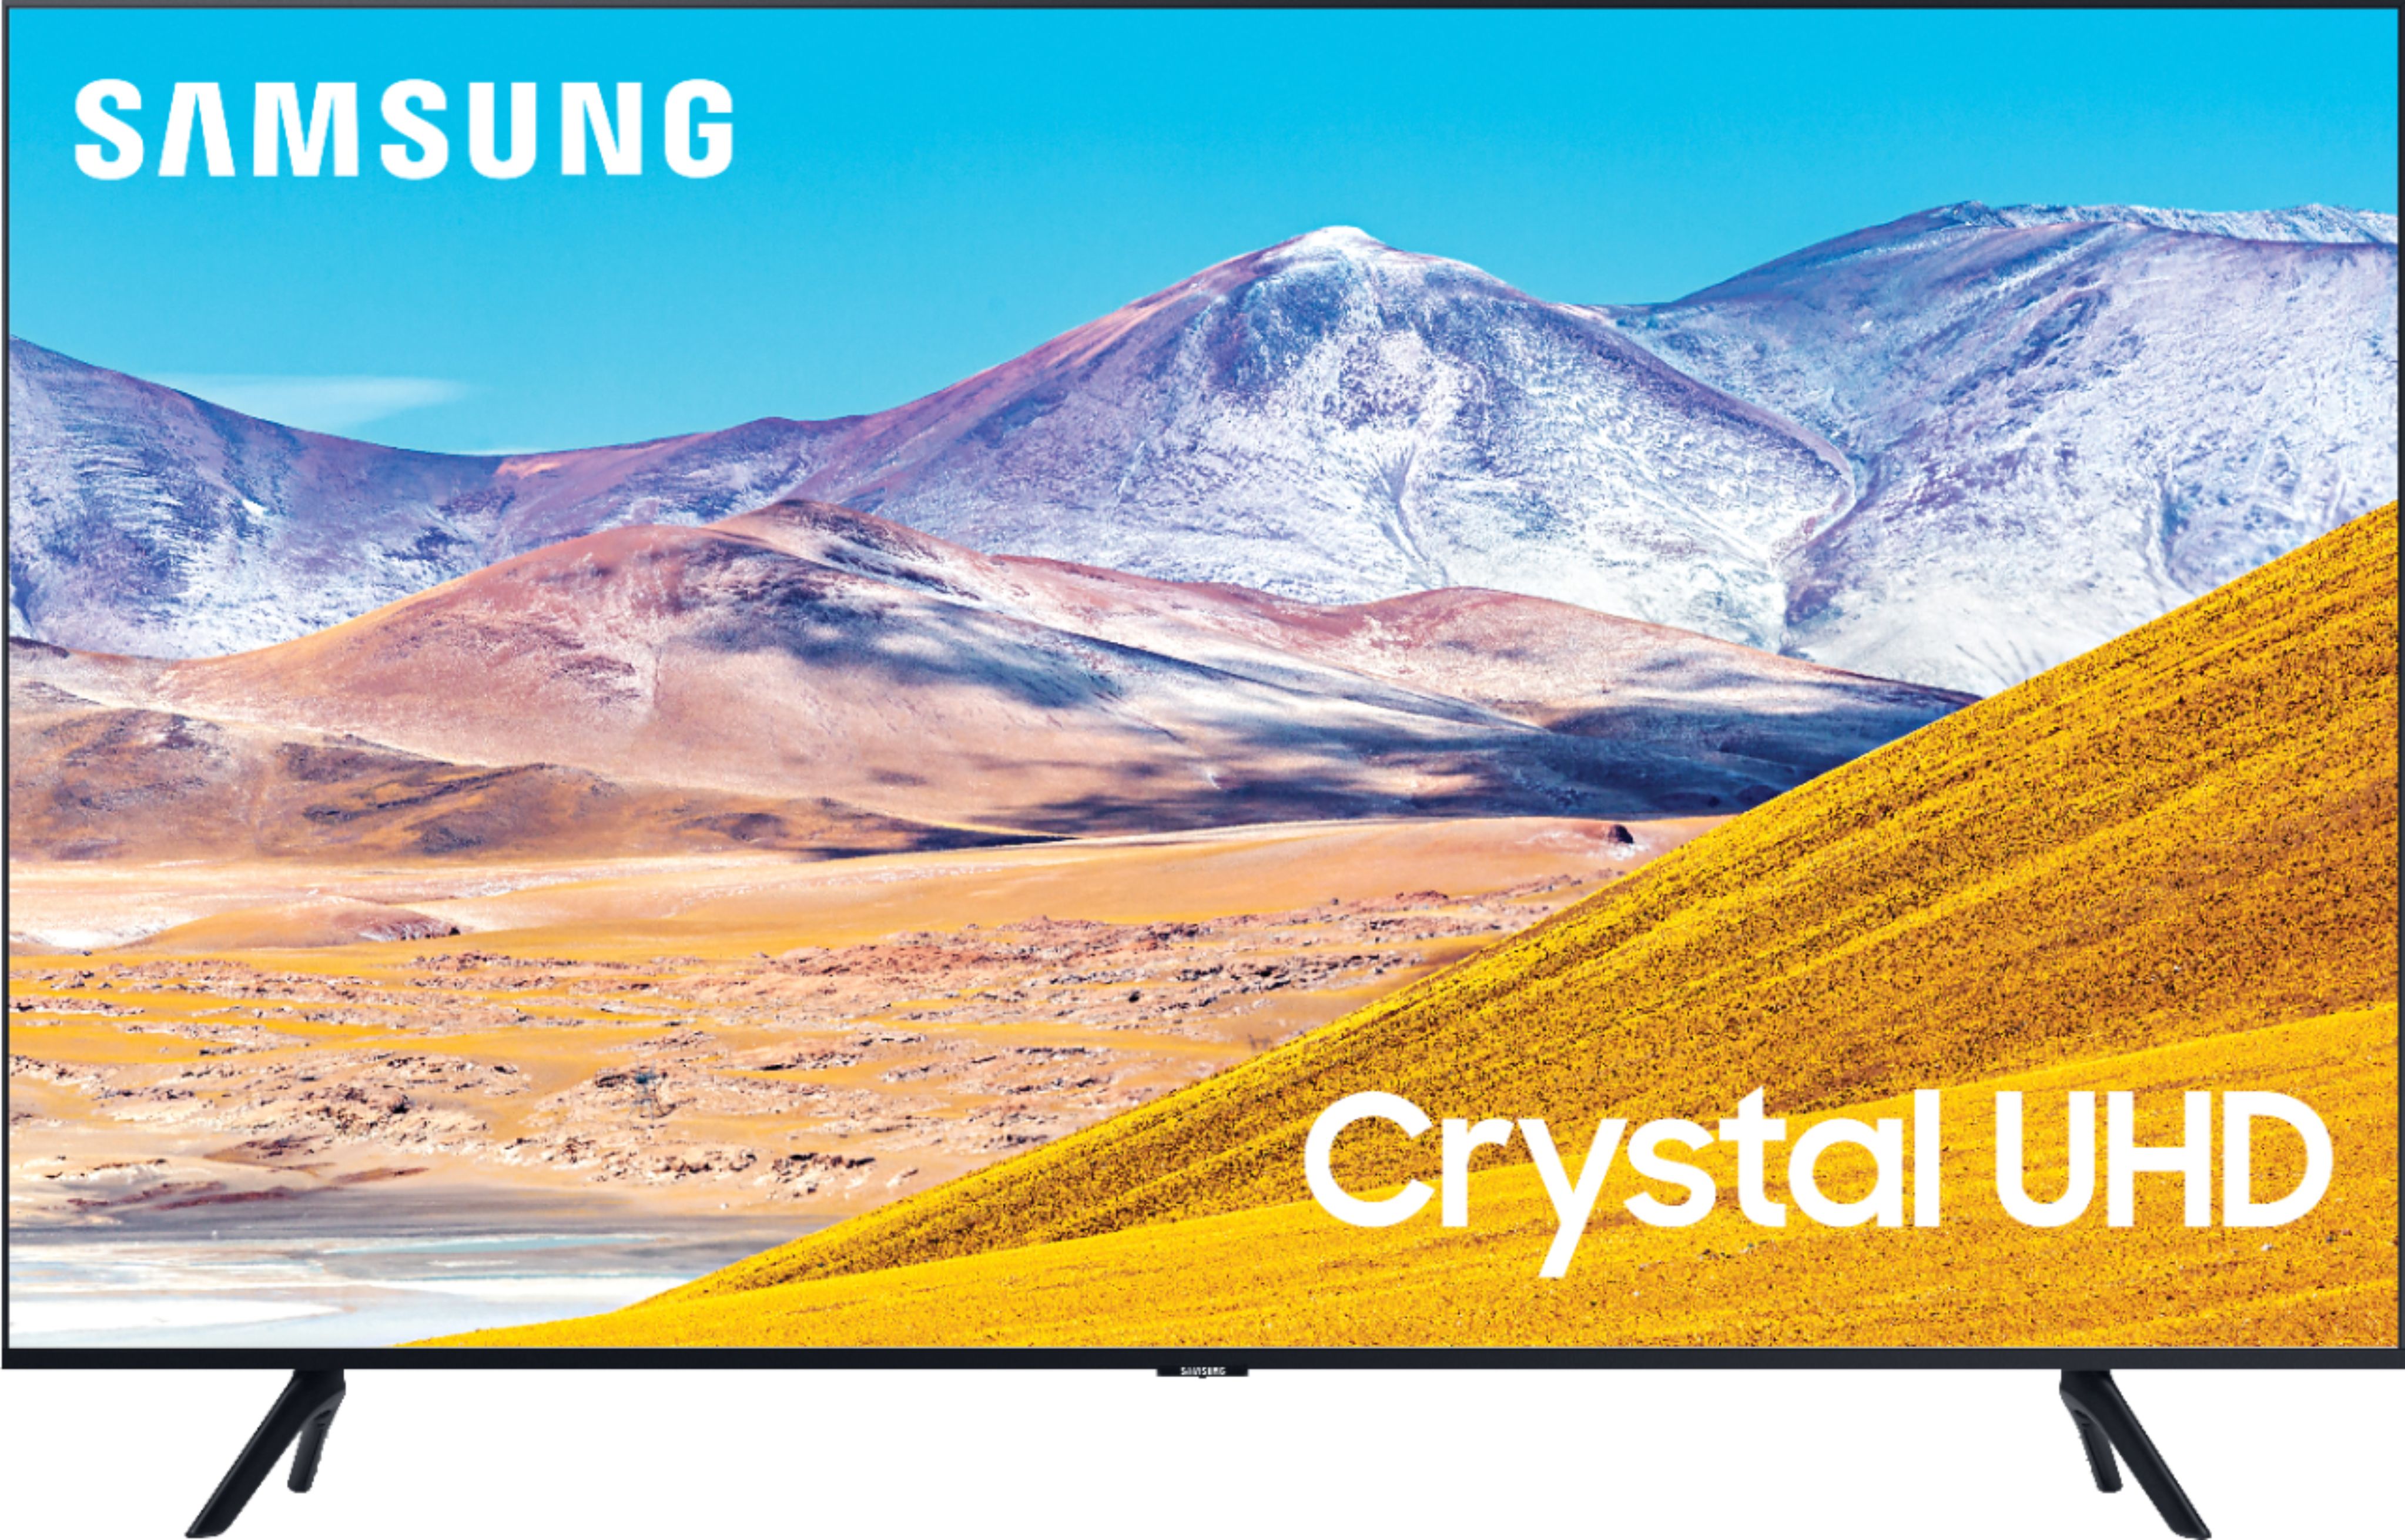 Samsung 43" Class 8 Series LED 4K UHD Smart Tizen TV UN43TU8000FXZA